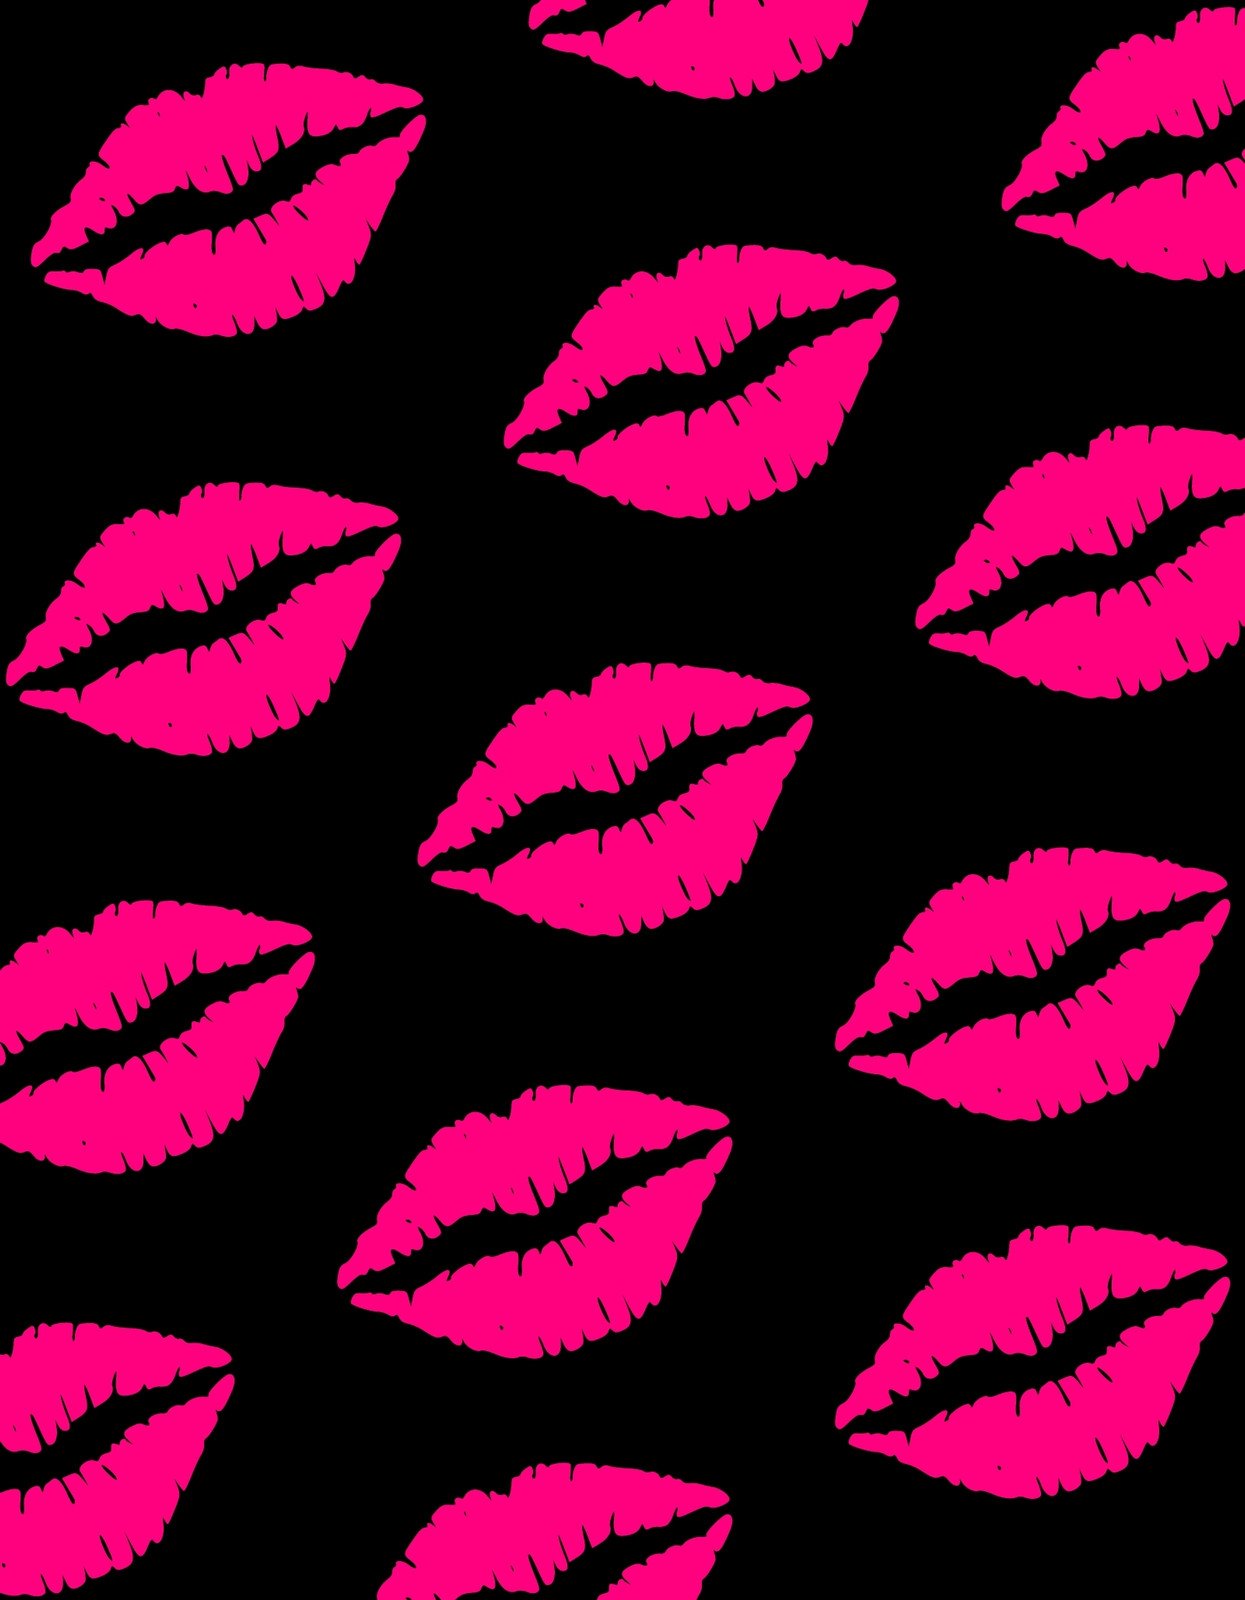 Lipstick Kiss Mark With Black Background